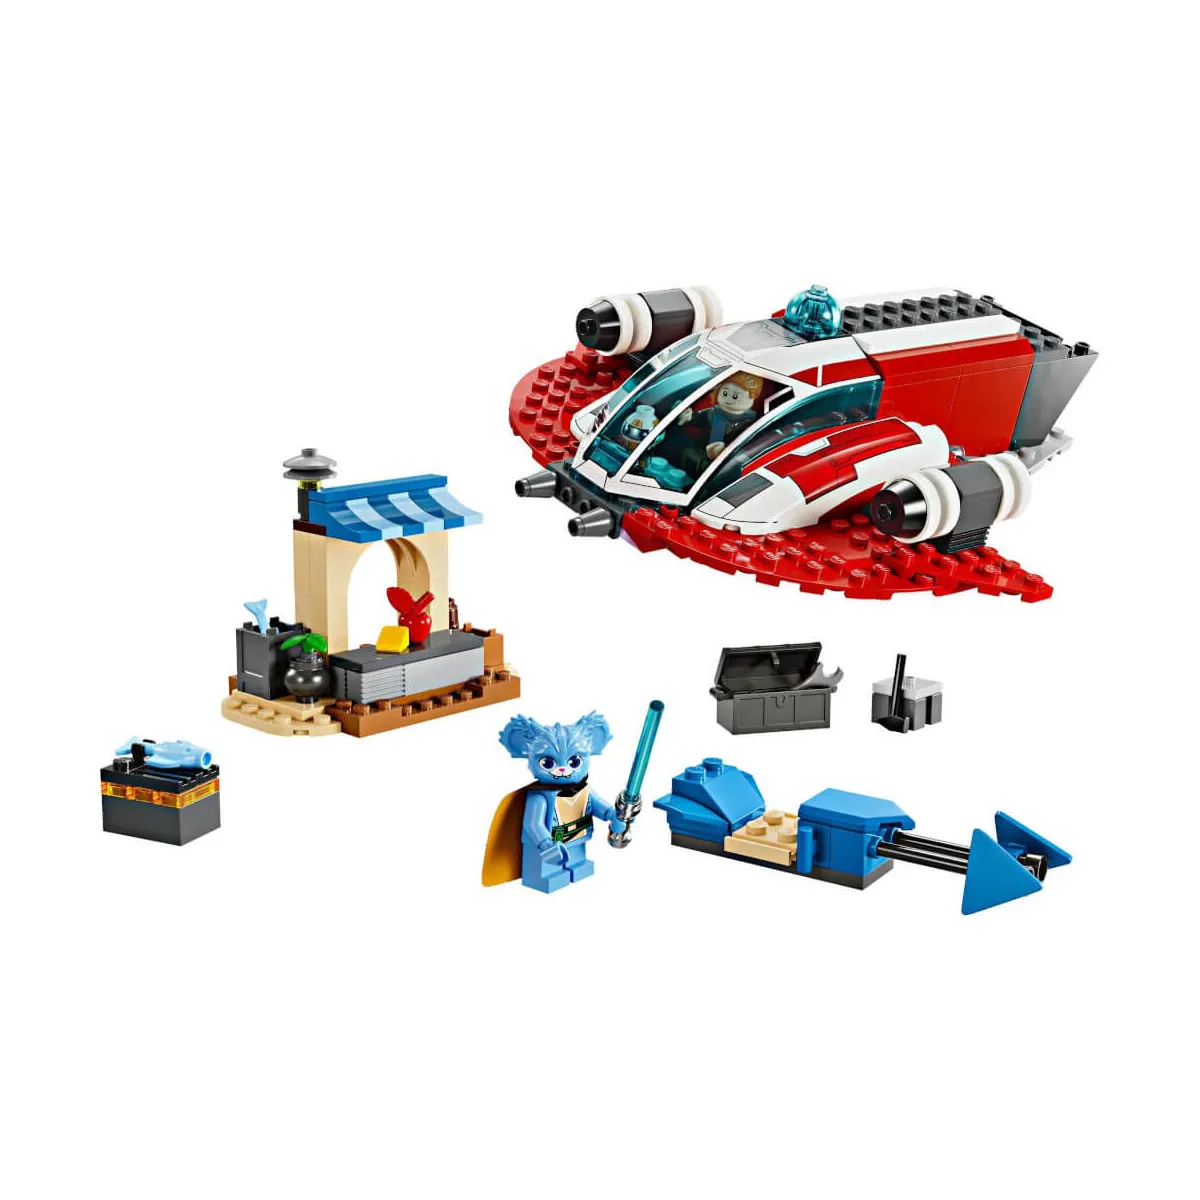 LEGO 75384 Star Wars Der Crimson Firehawk™